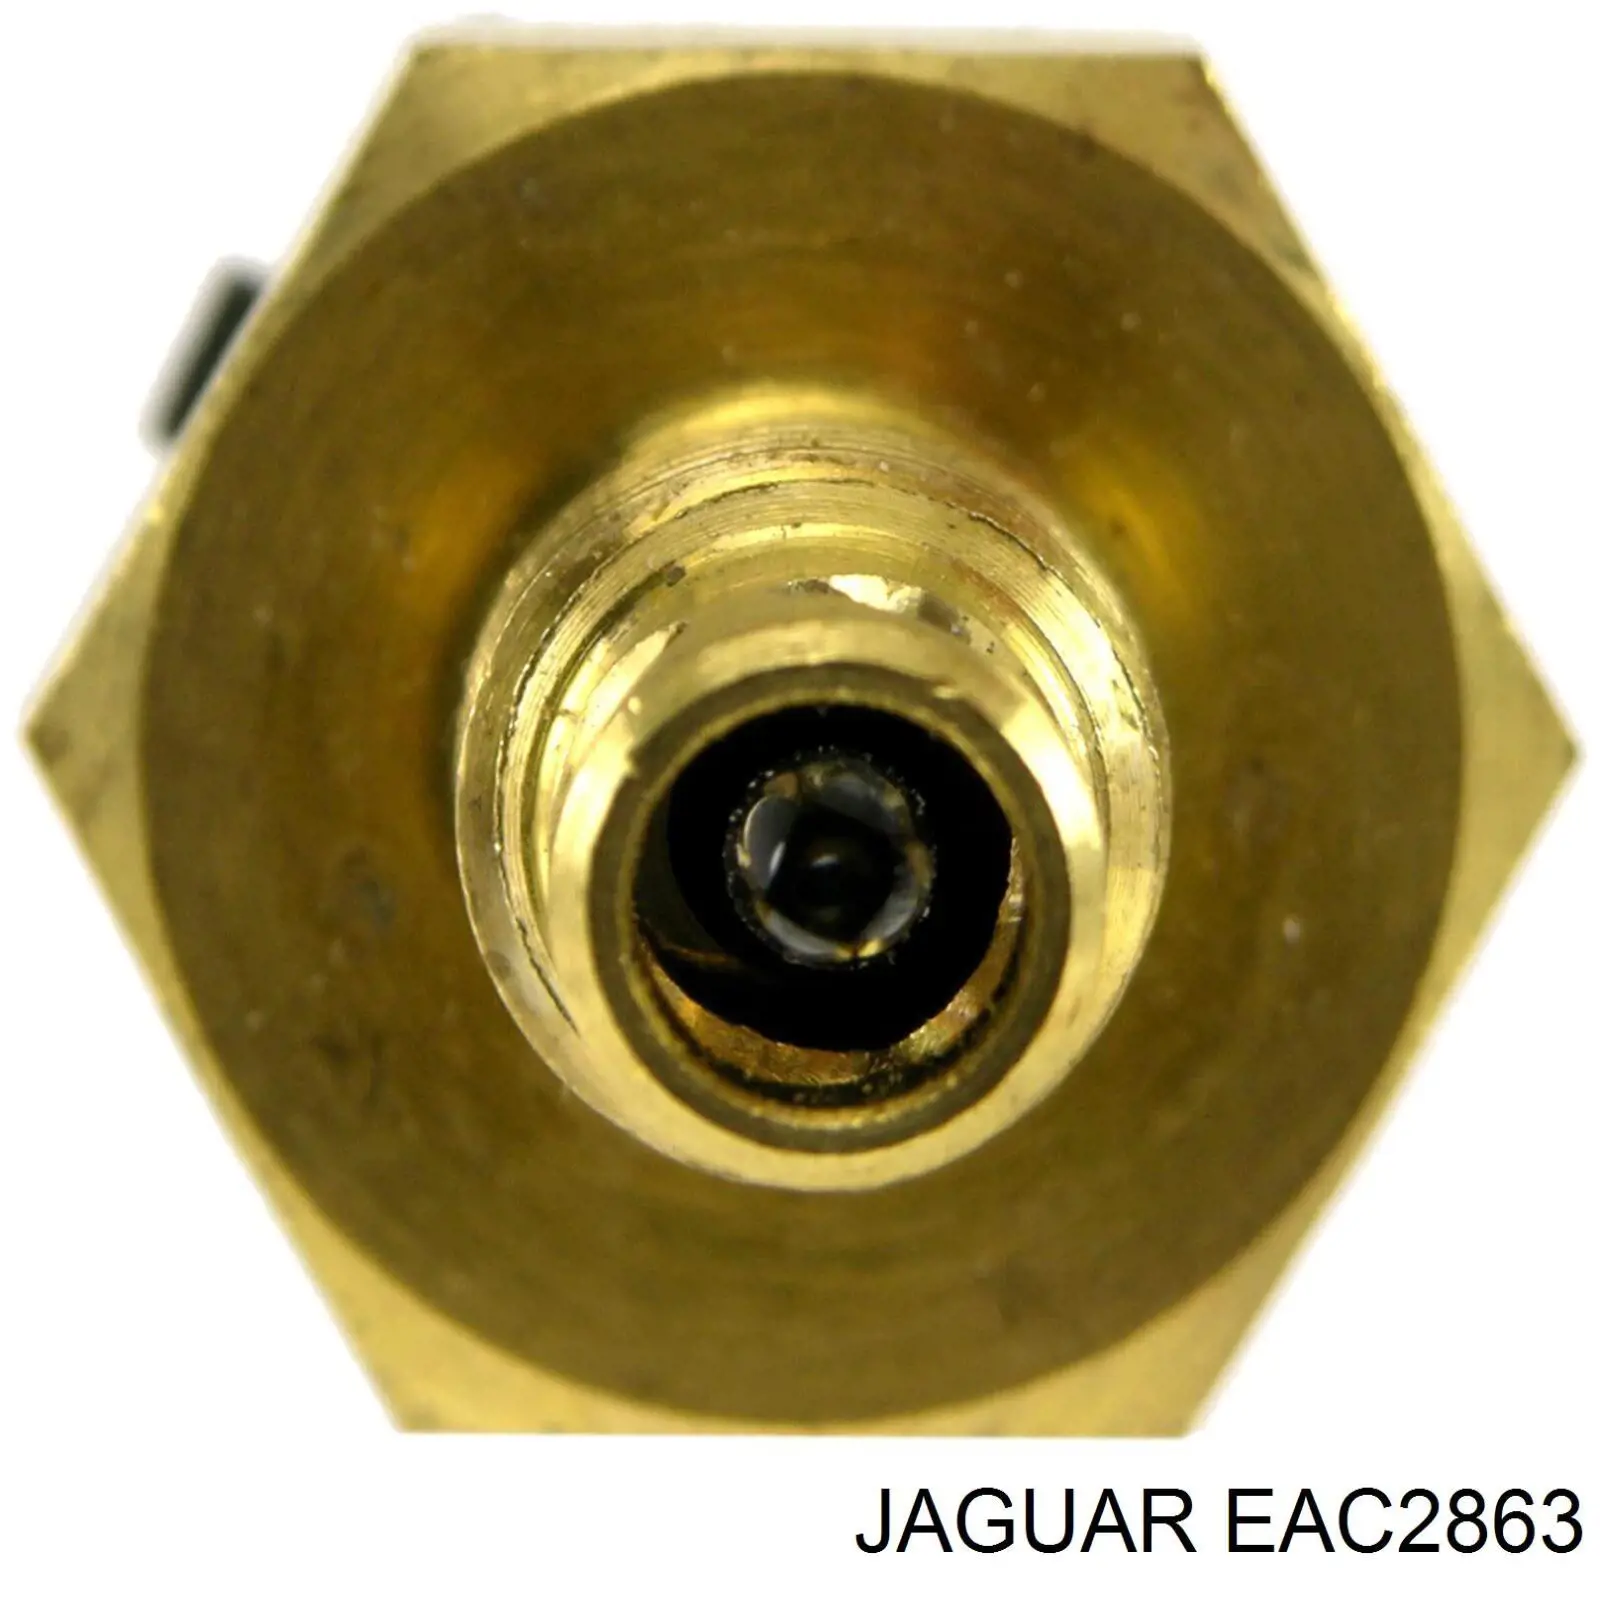 EAC2863 Jaguar